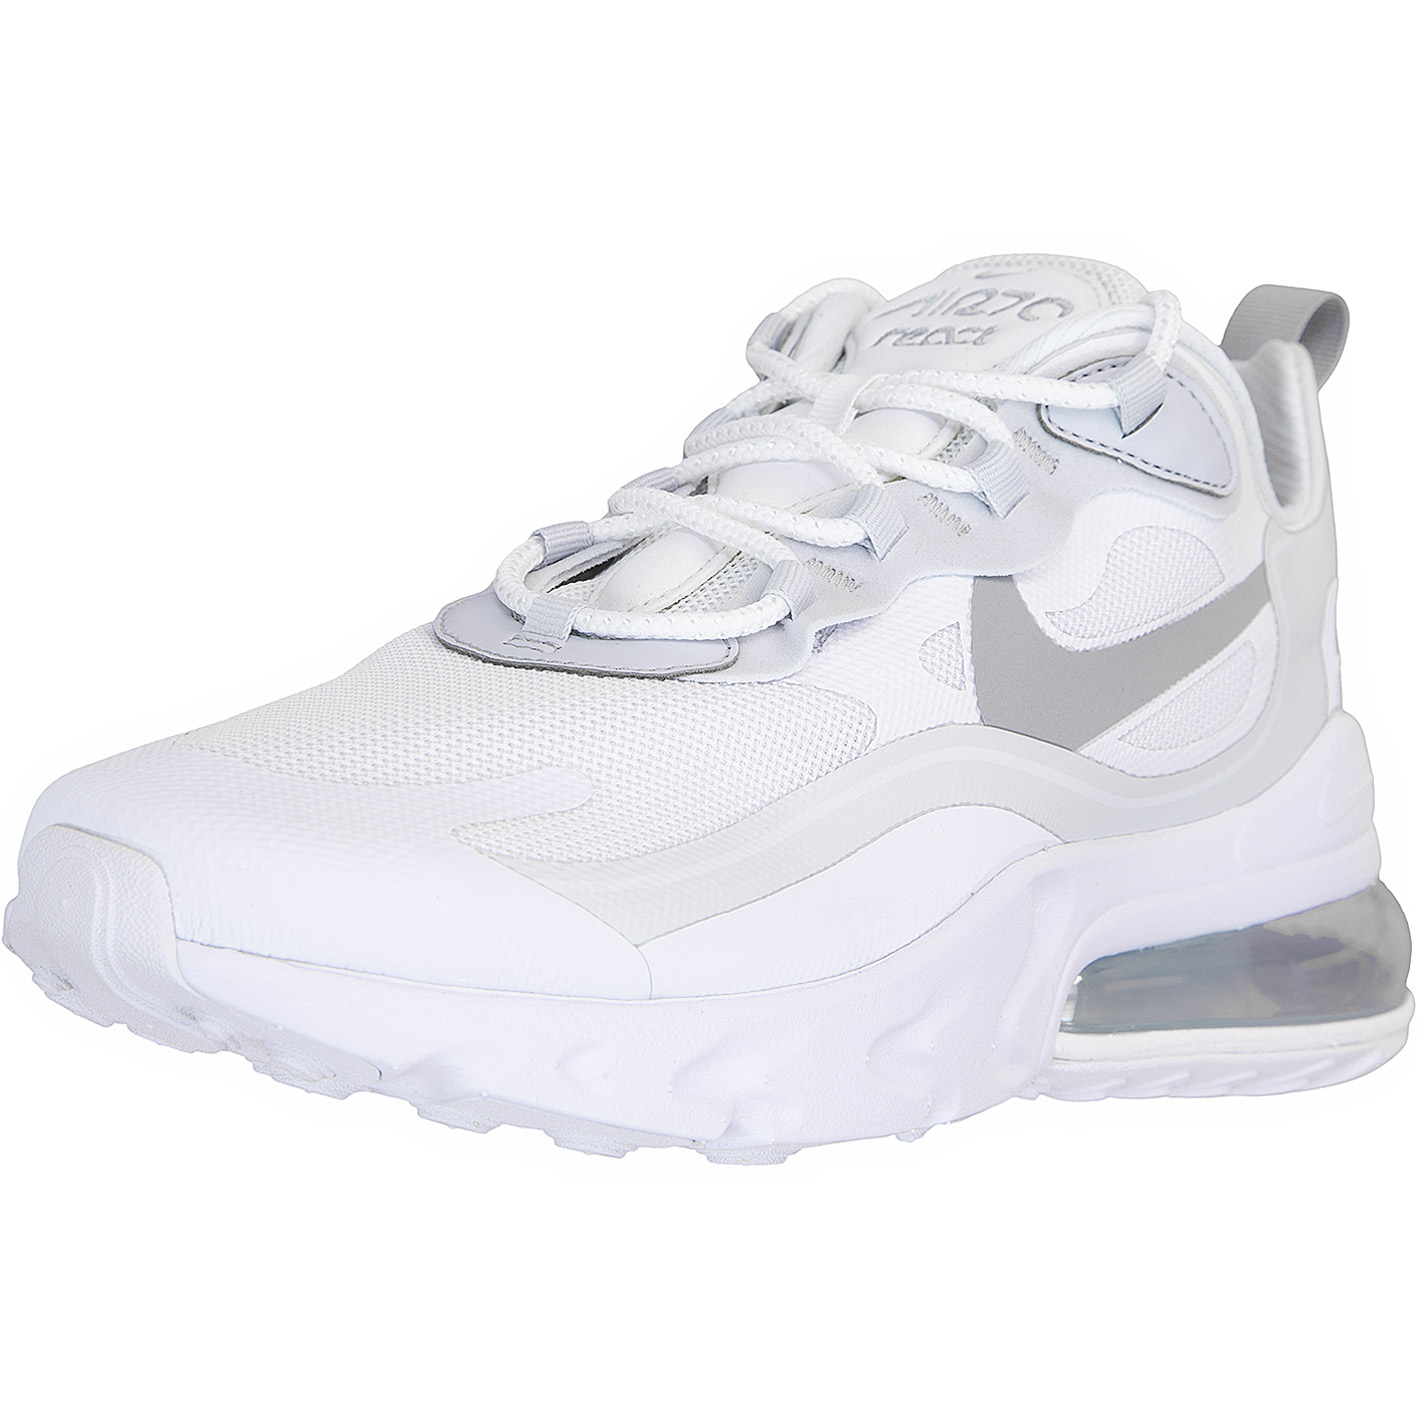 ☆ Nike Sneaker Air Max 270 React weiß - hier bestellen!